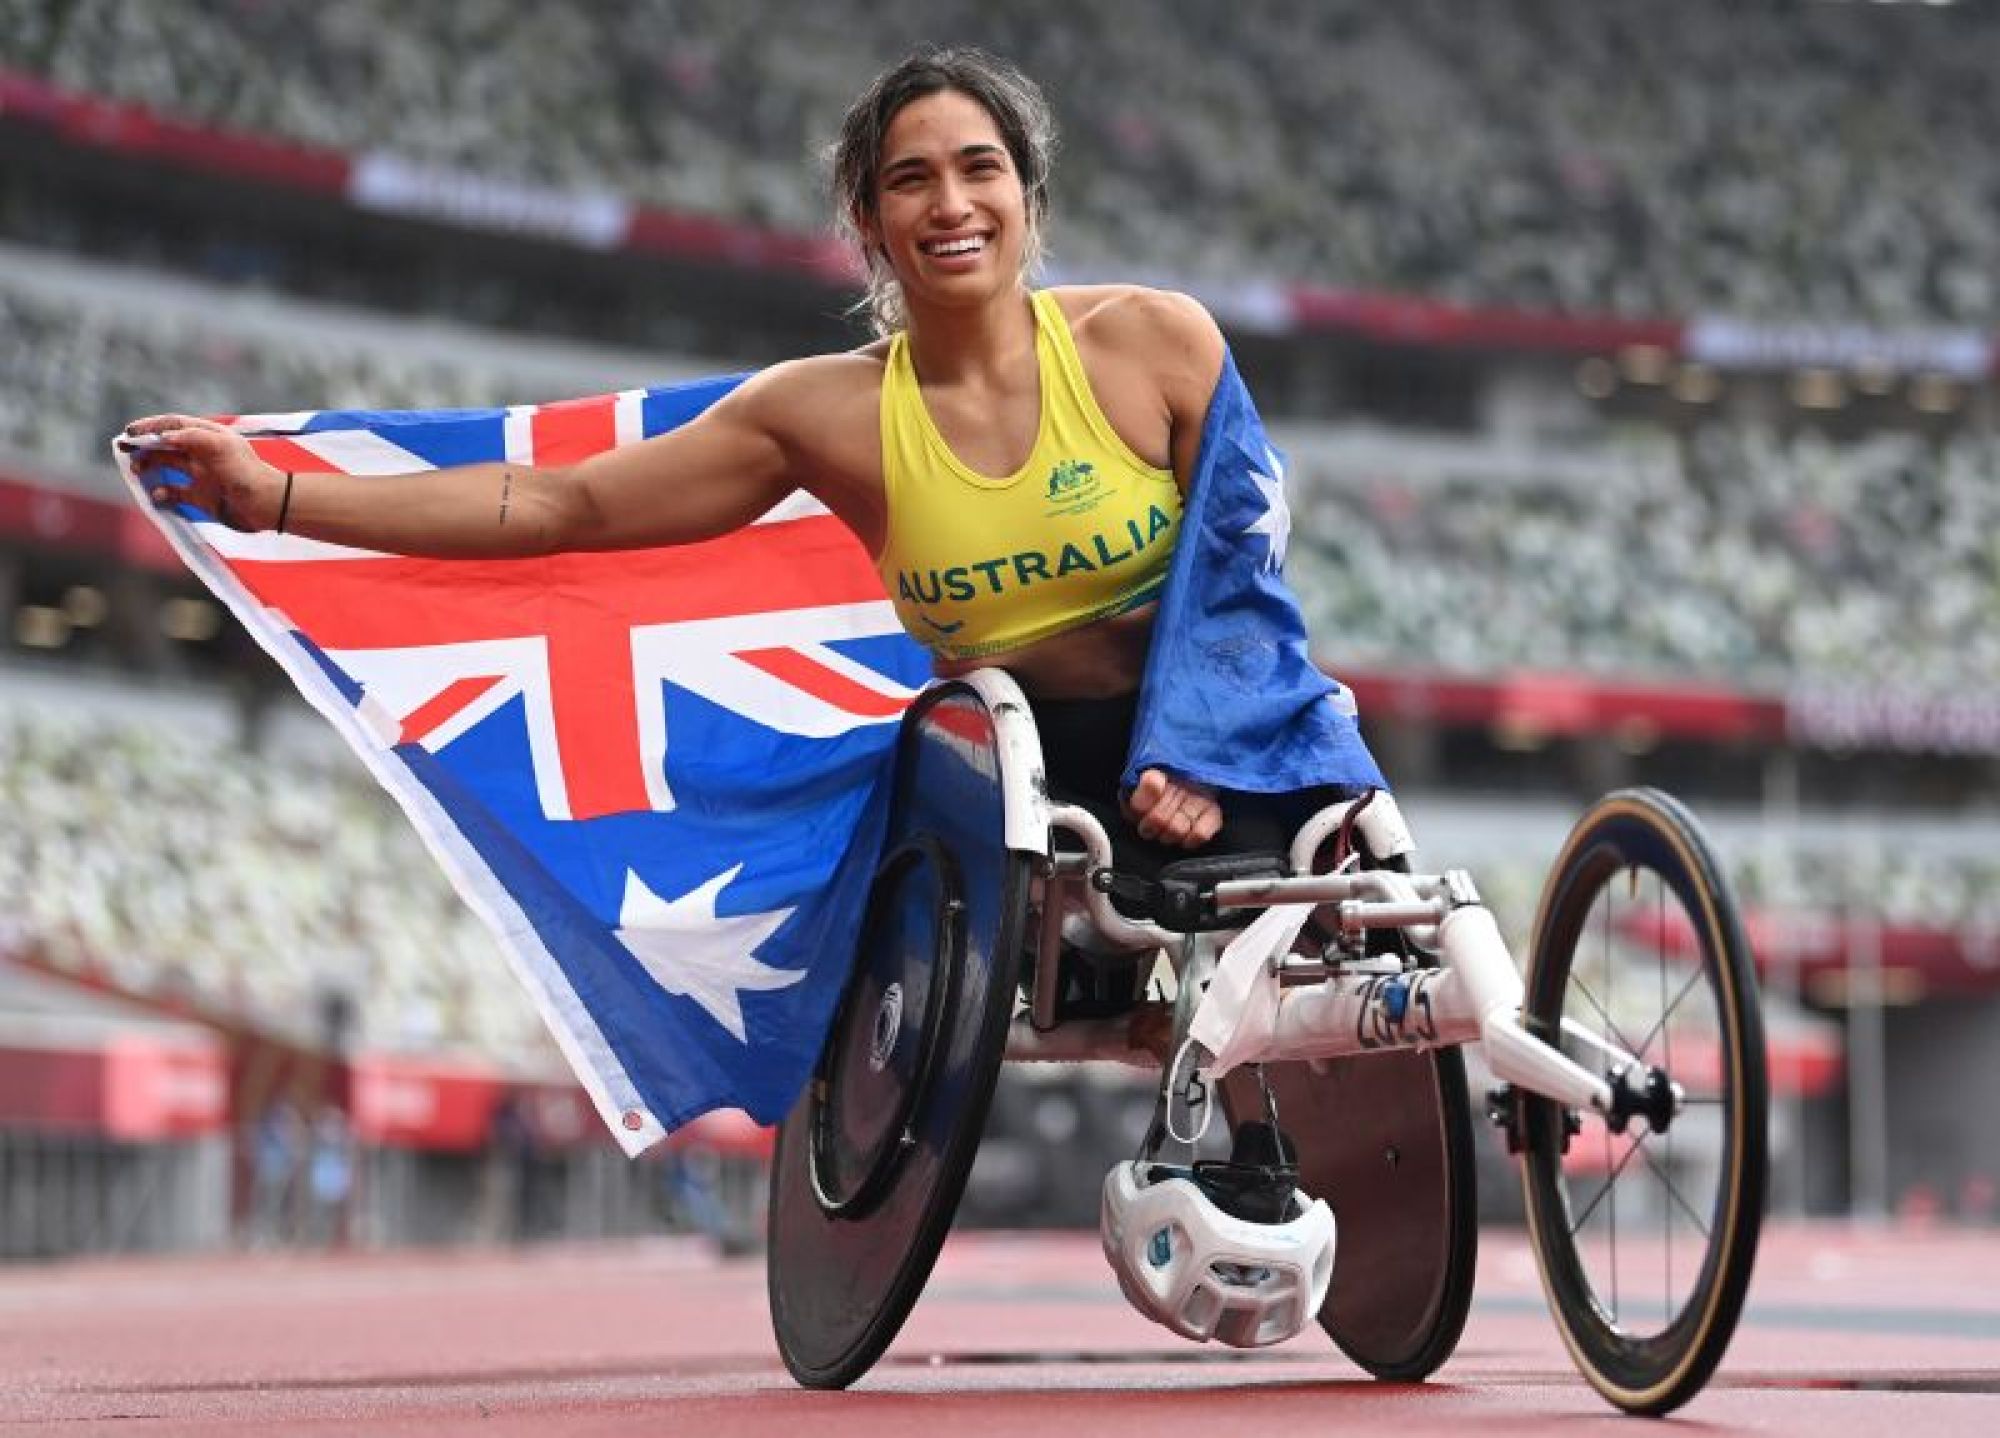 The Paralympics legacy of Australia